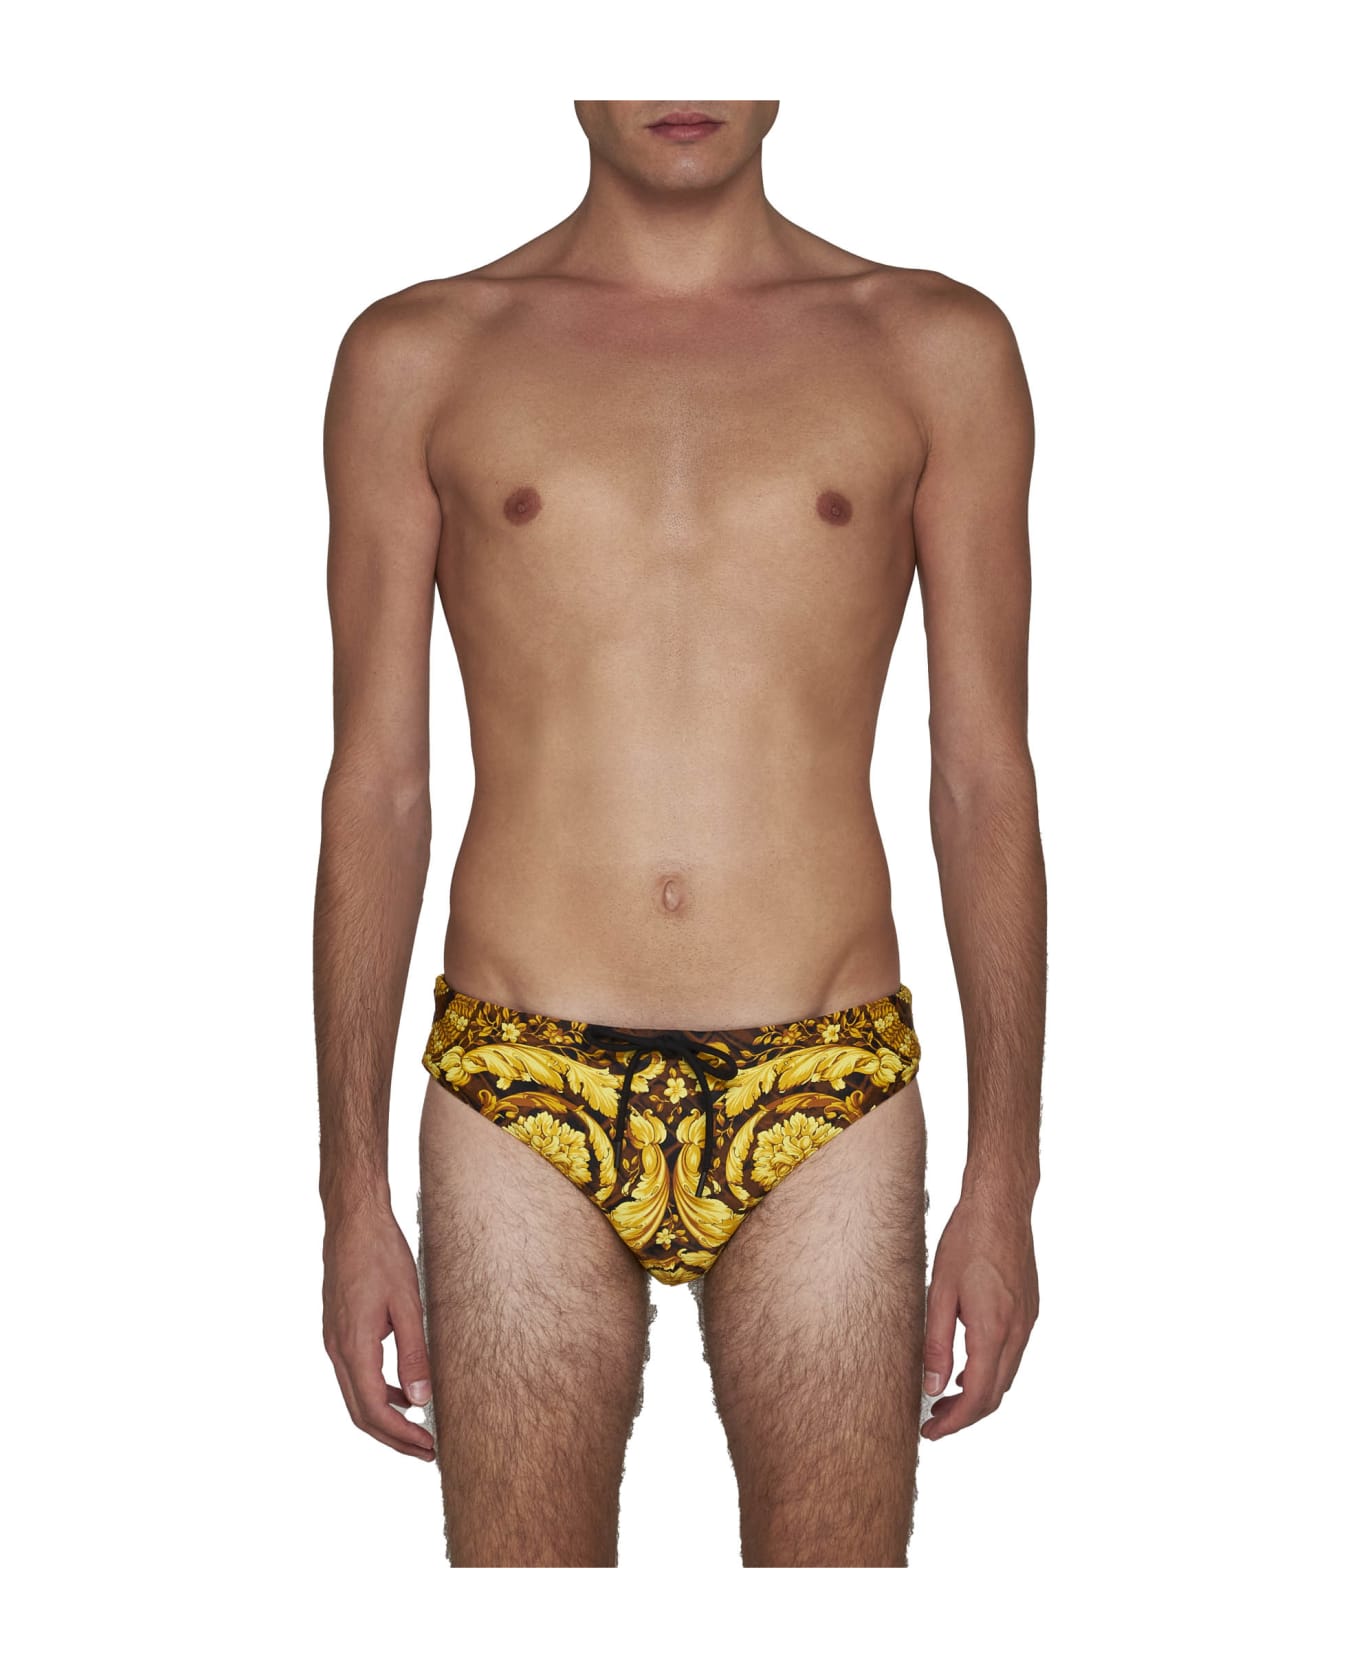 Versace 'baroccodile' Swim Briefs - Caramel+black+gold 水着